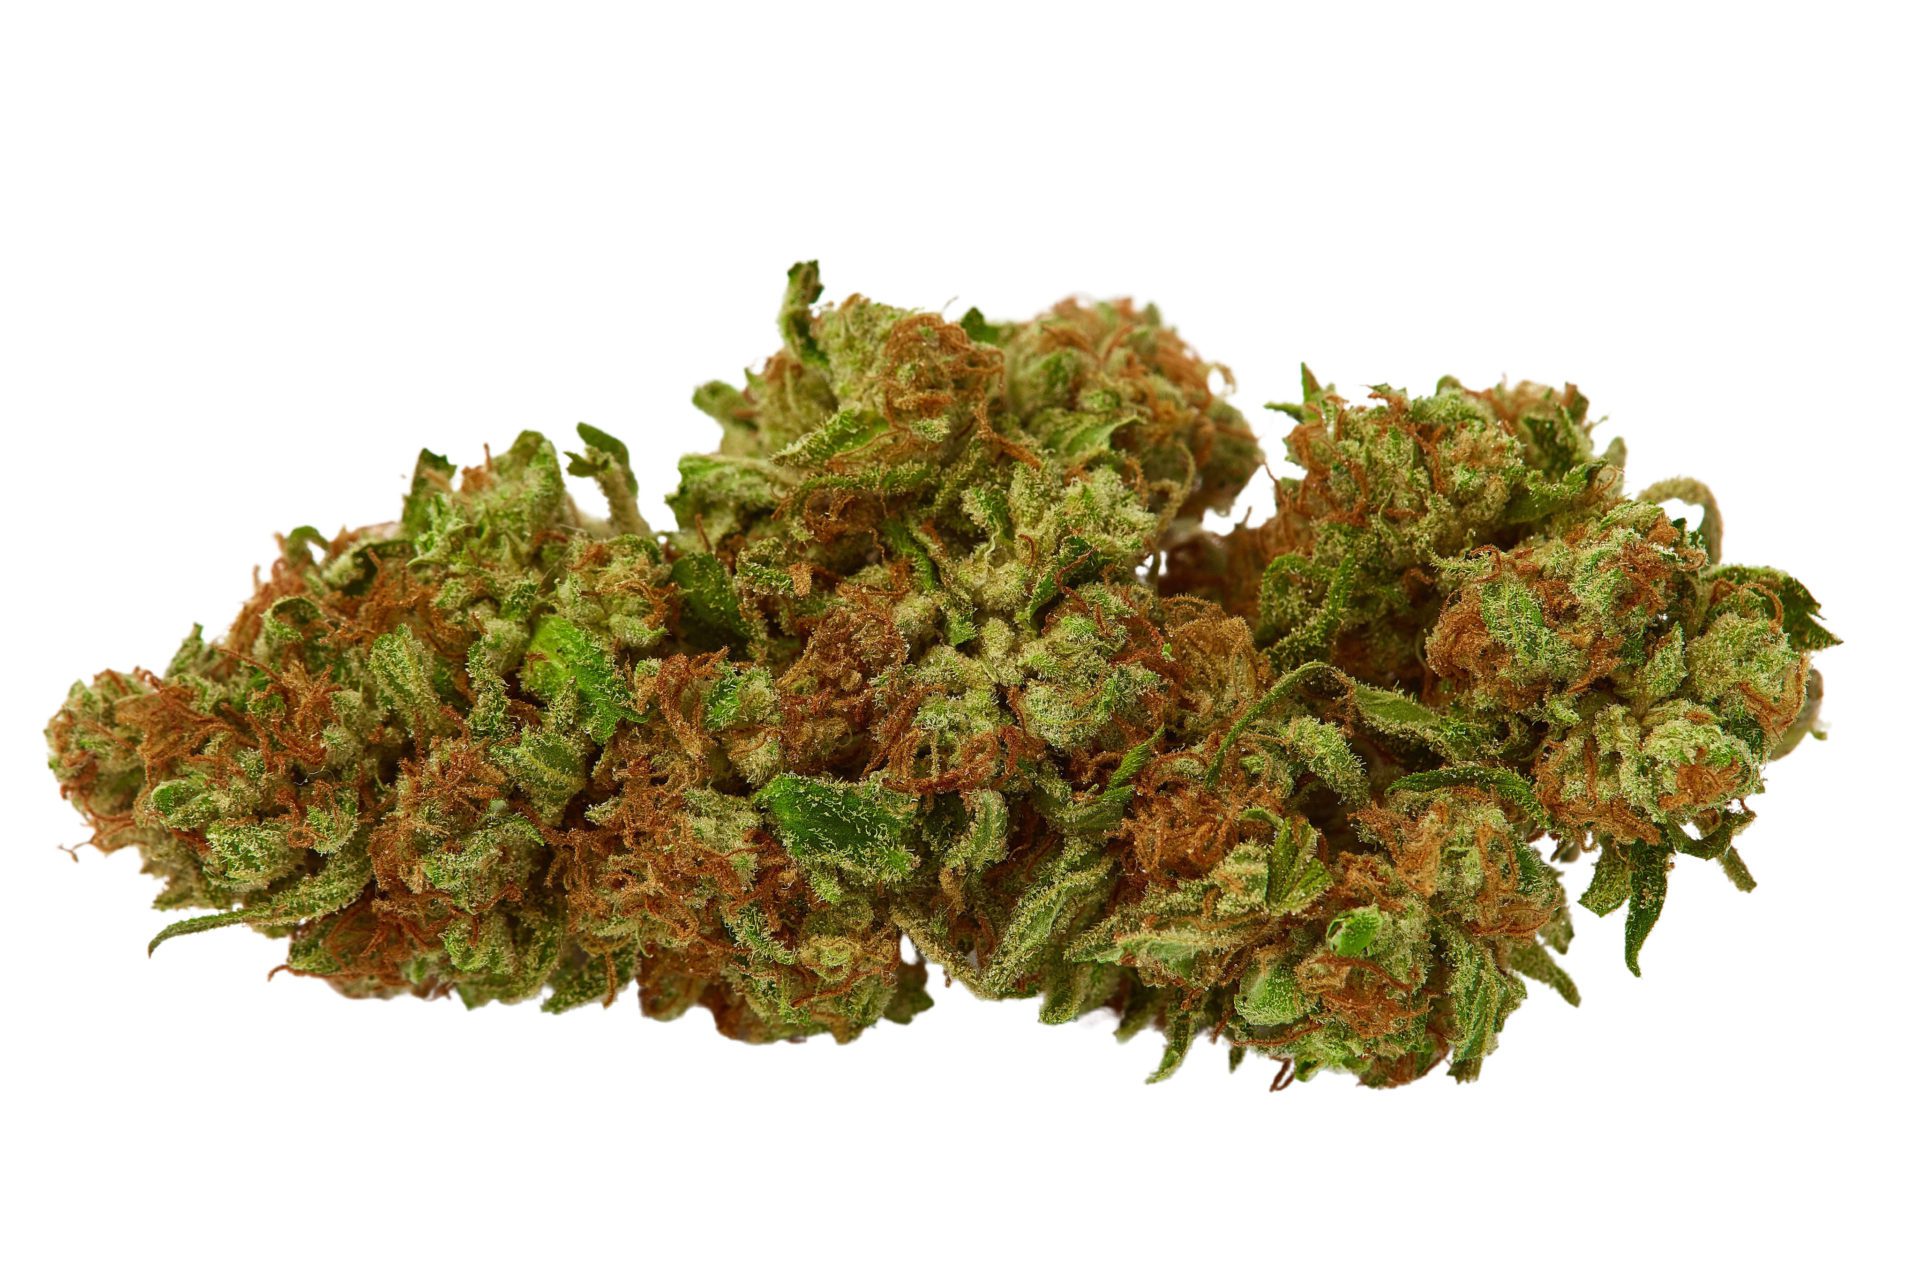 closeup of strawnana marijuana nugget